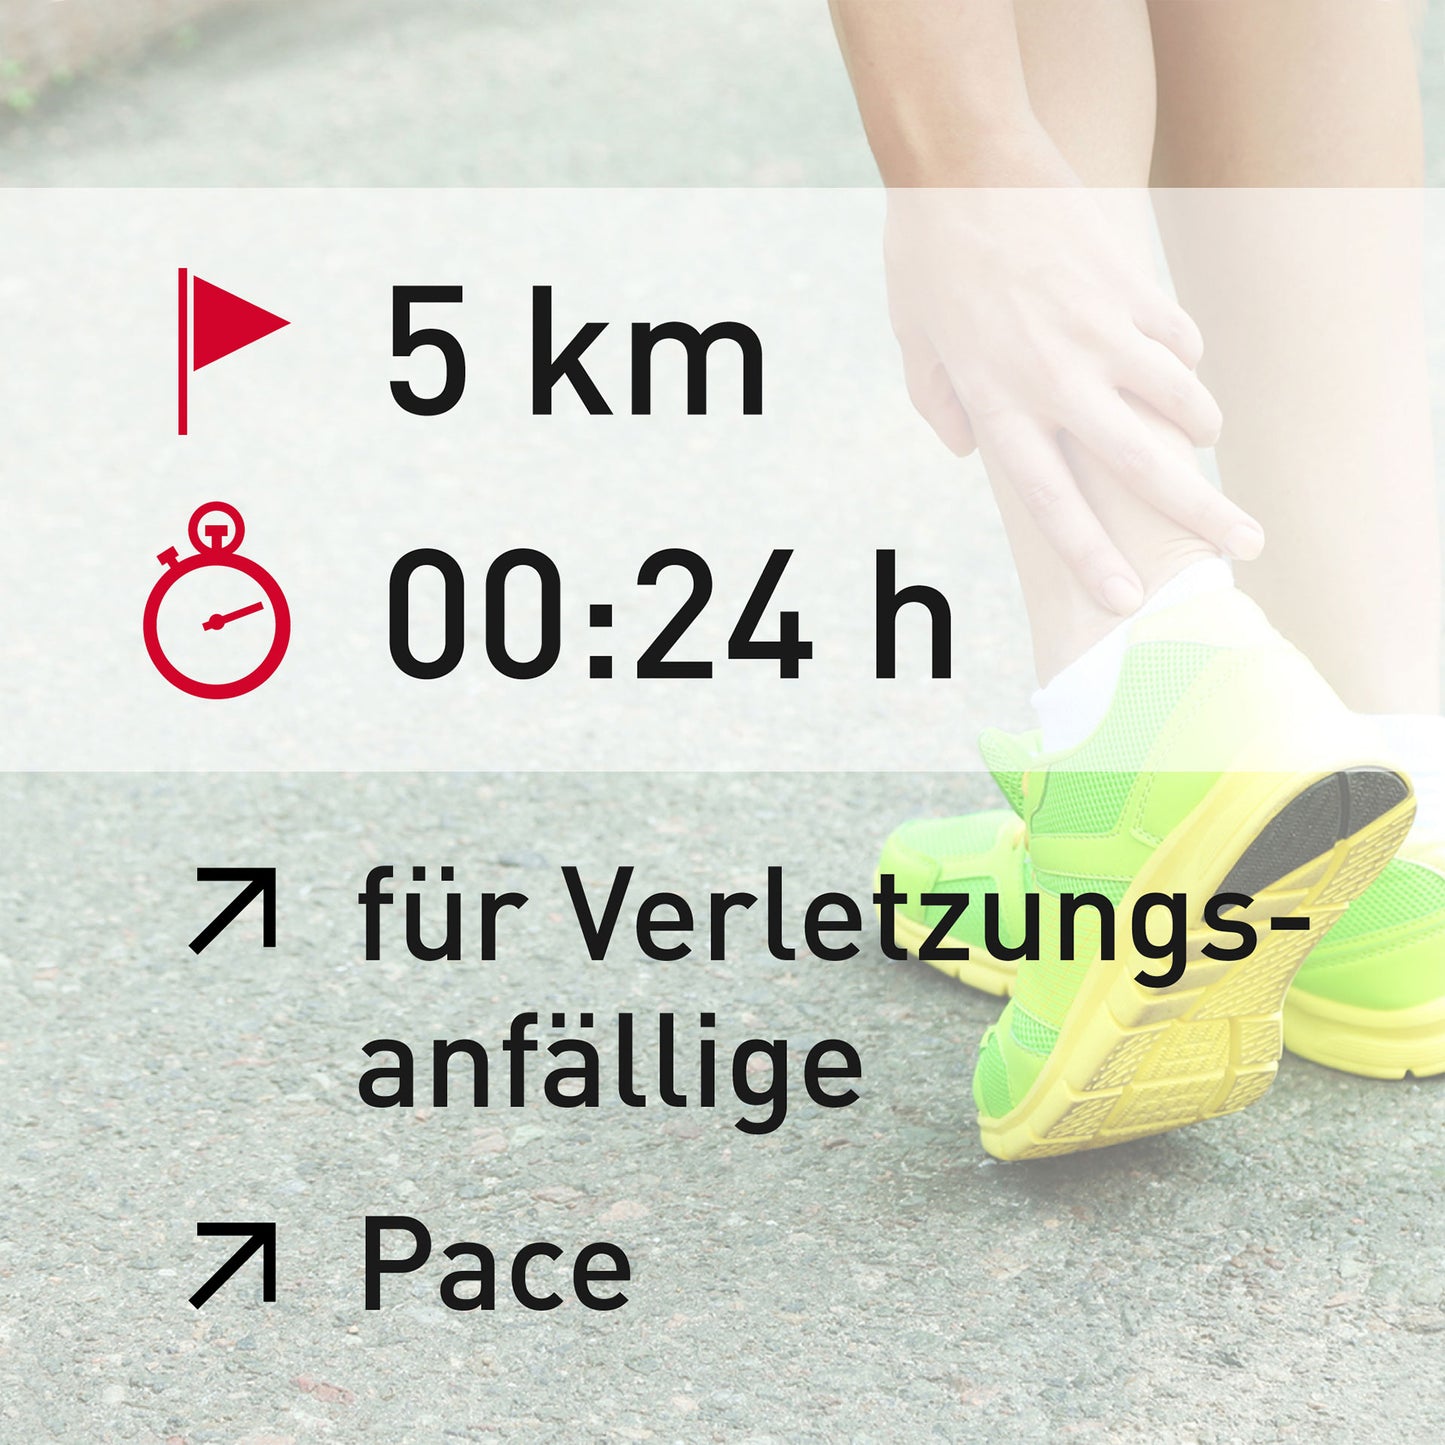 TRAININGSPLAN: 5 km | Verletzungsanfällige Läufer | Pace